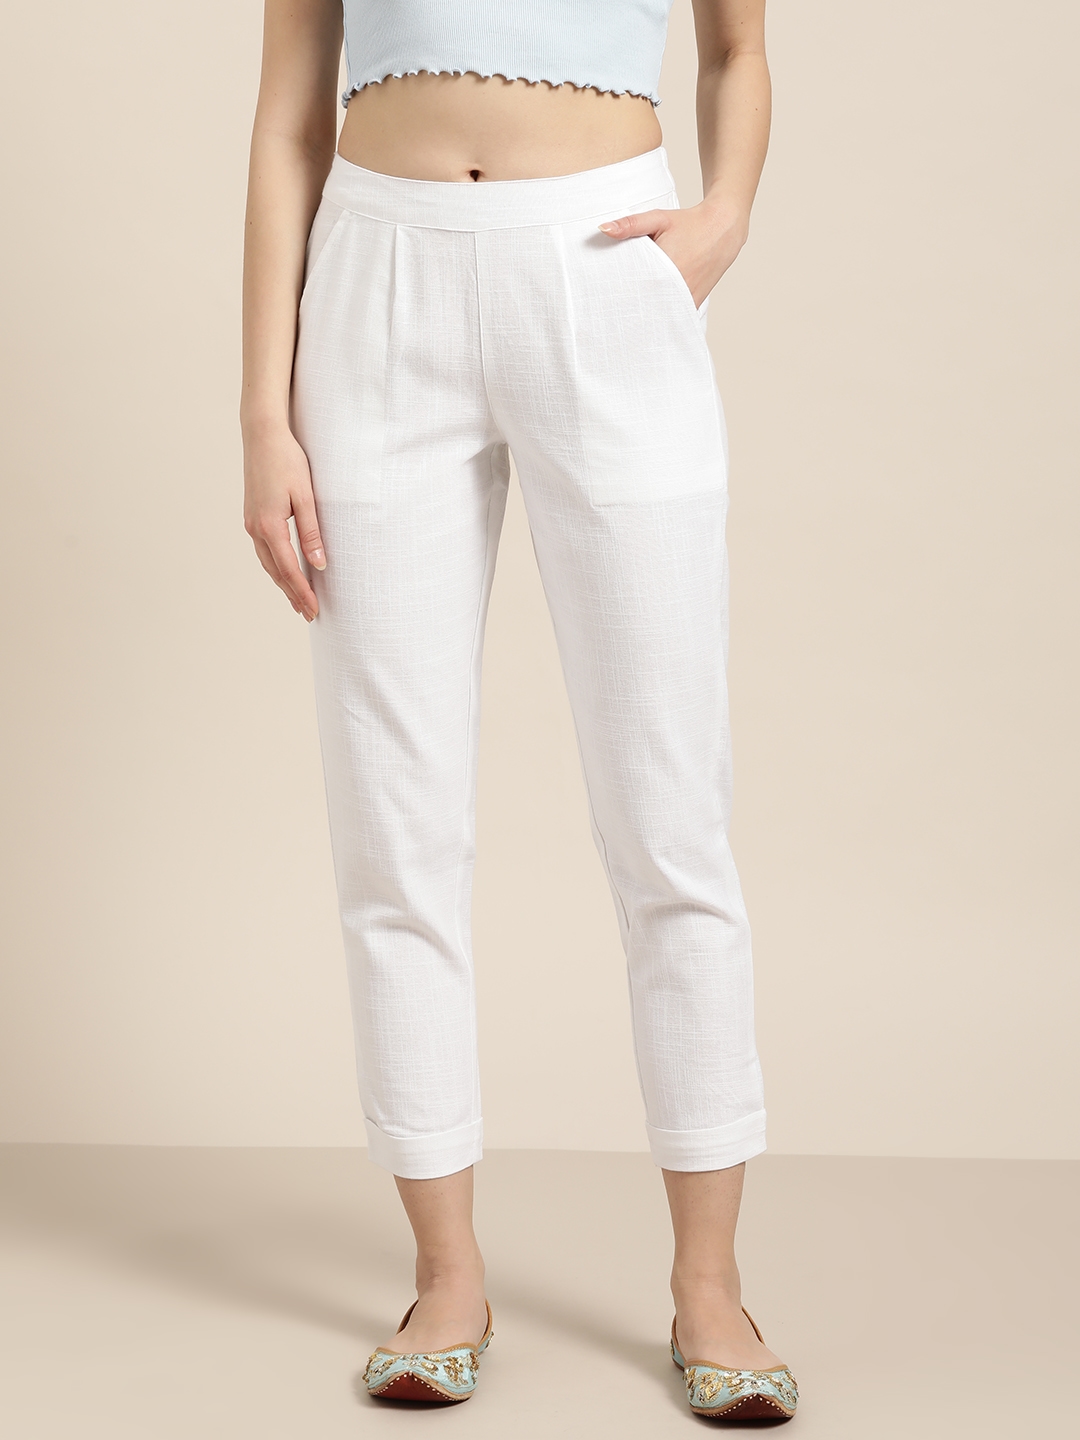 Nadine Merabi Margot White Trousers Womens Size S/M = 10 BRAND NEW | eBay-anthinhphatland.vn